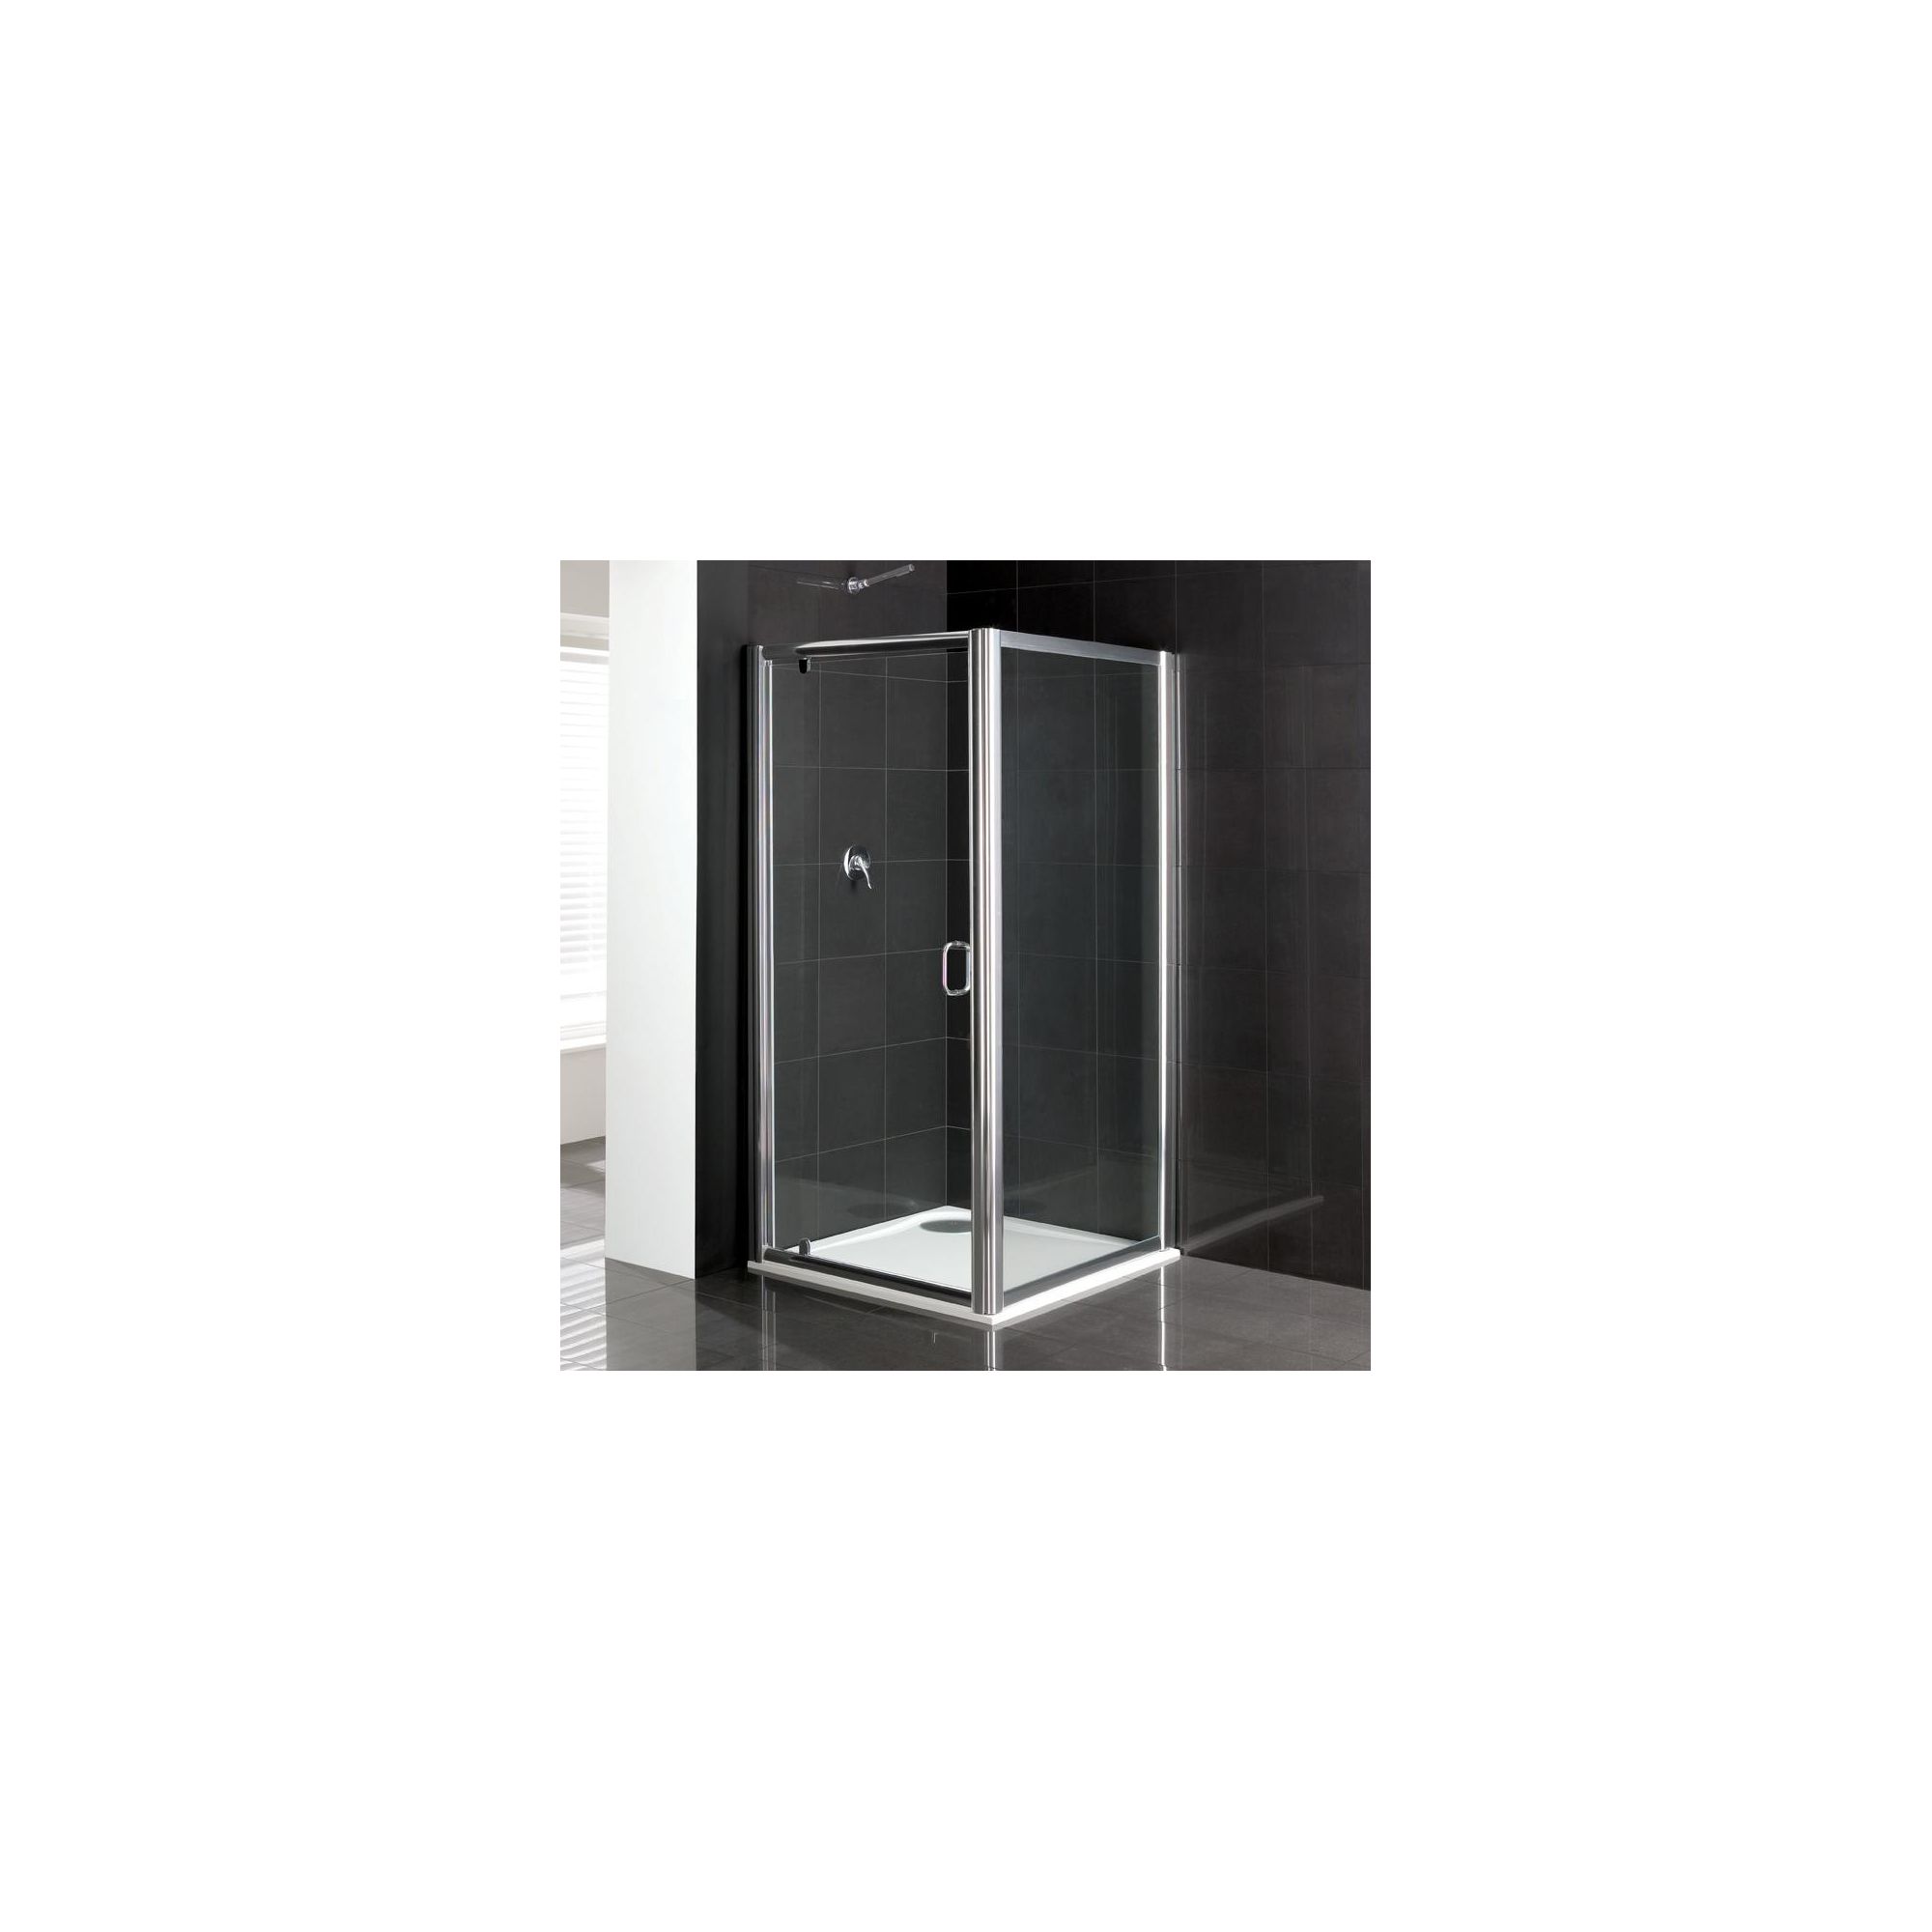 Duchy Elite Silver Pivot Door Shower Enclosure, 1000mm x 760mm, Standard Tray, 6mm Glass at Tesco Direct